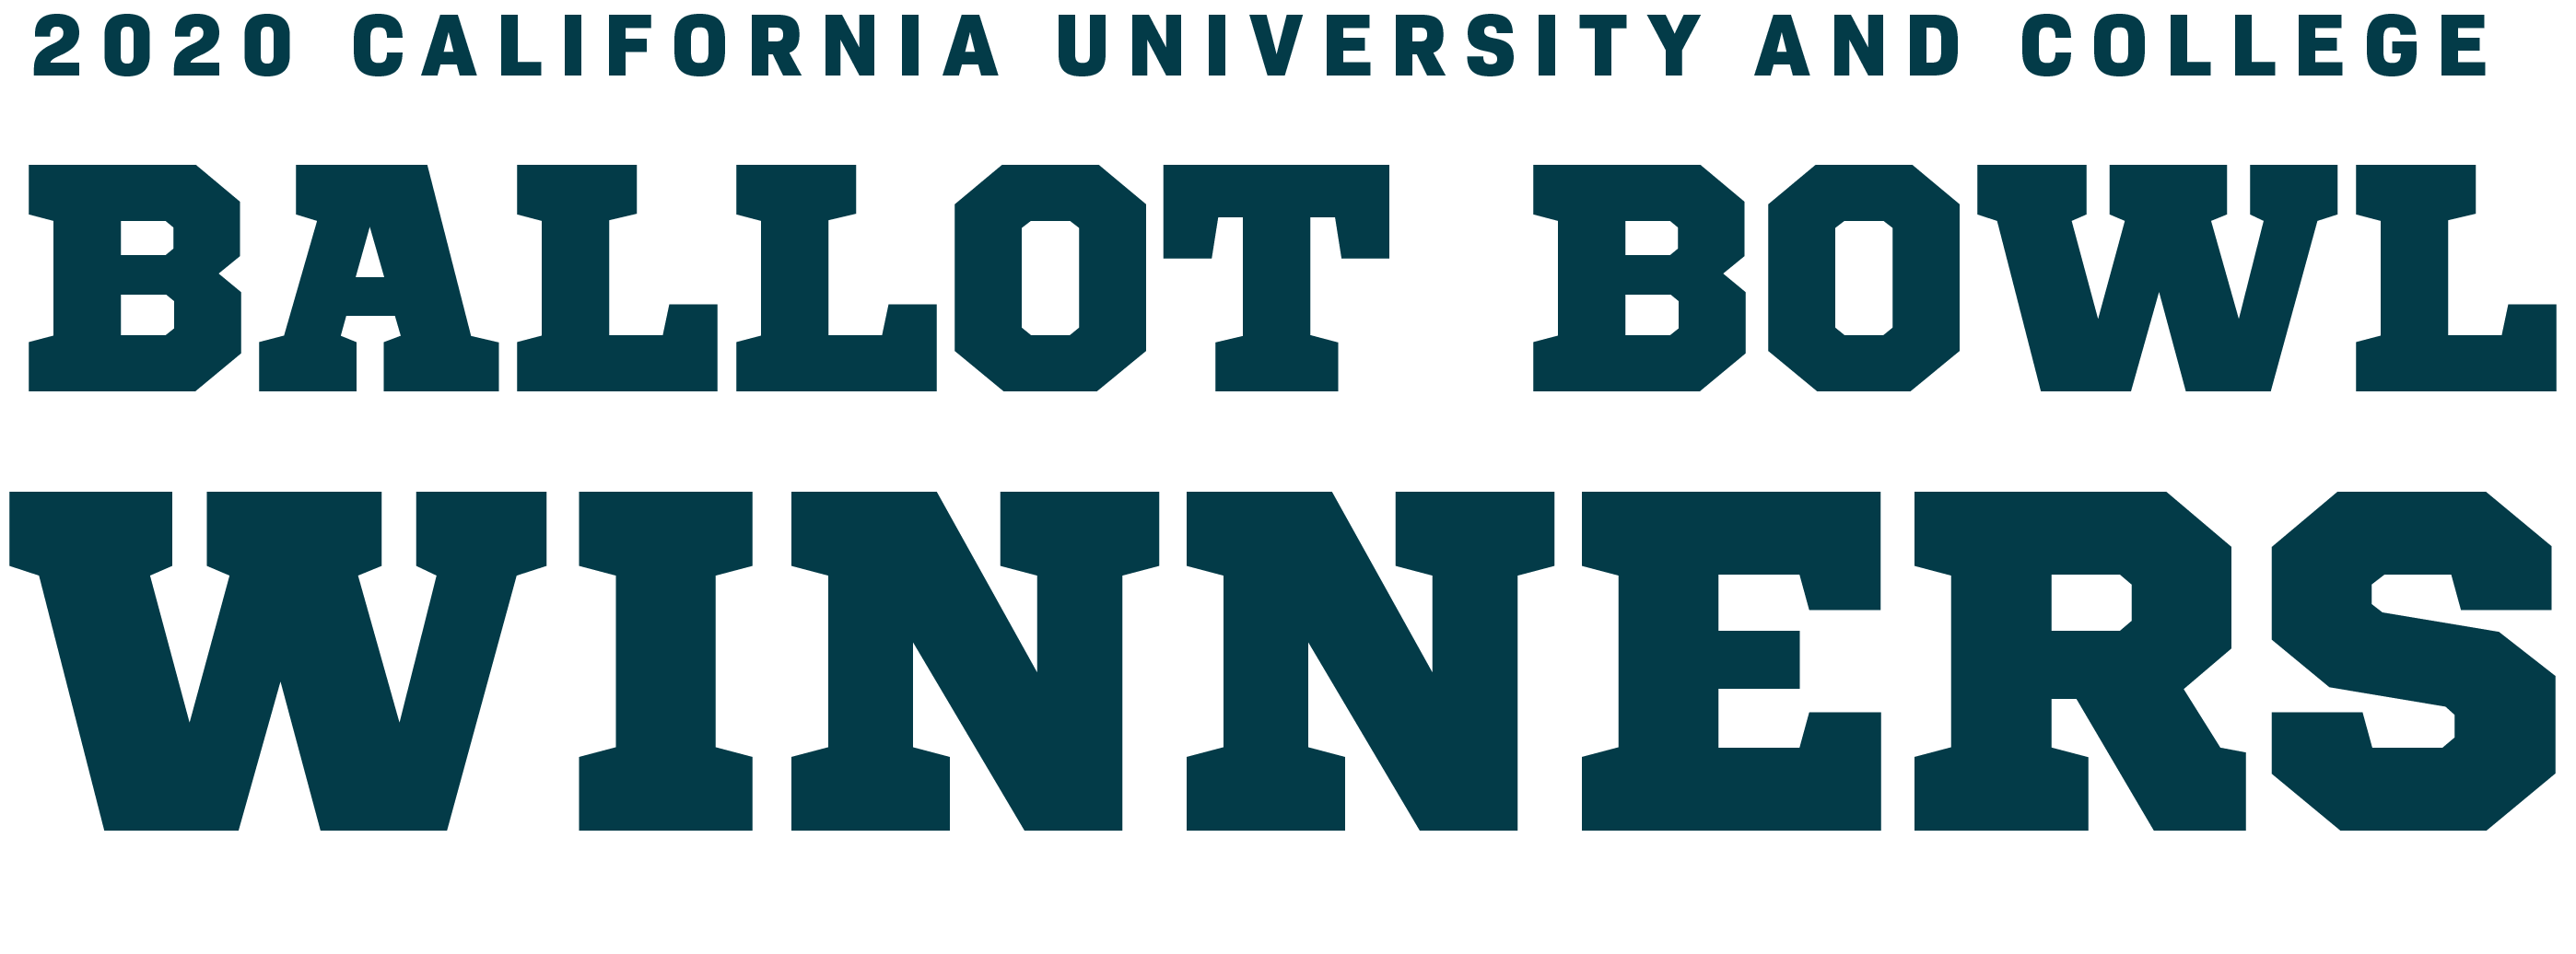 2020 California university and college ballot bowl winners